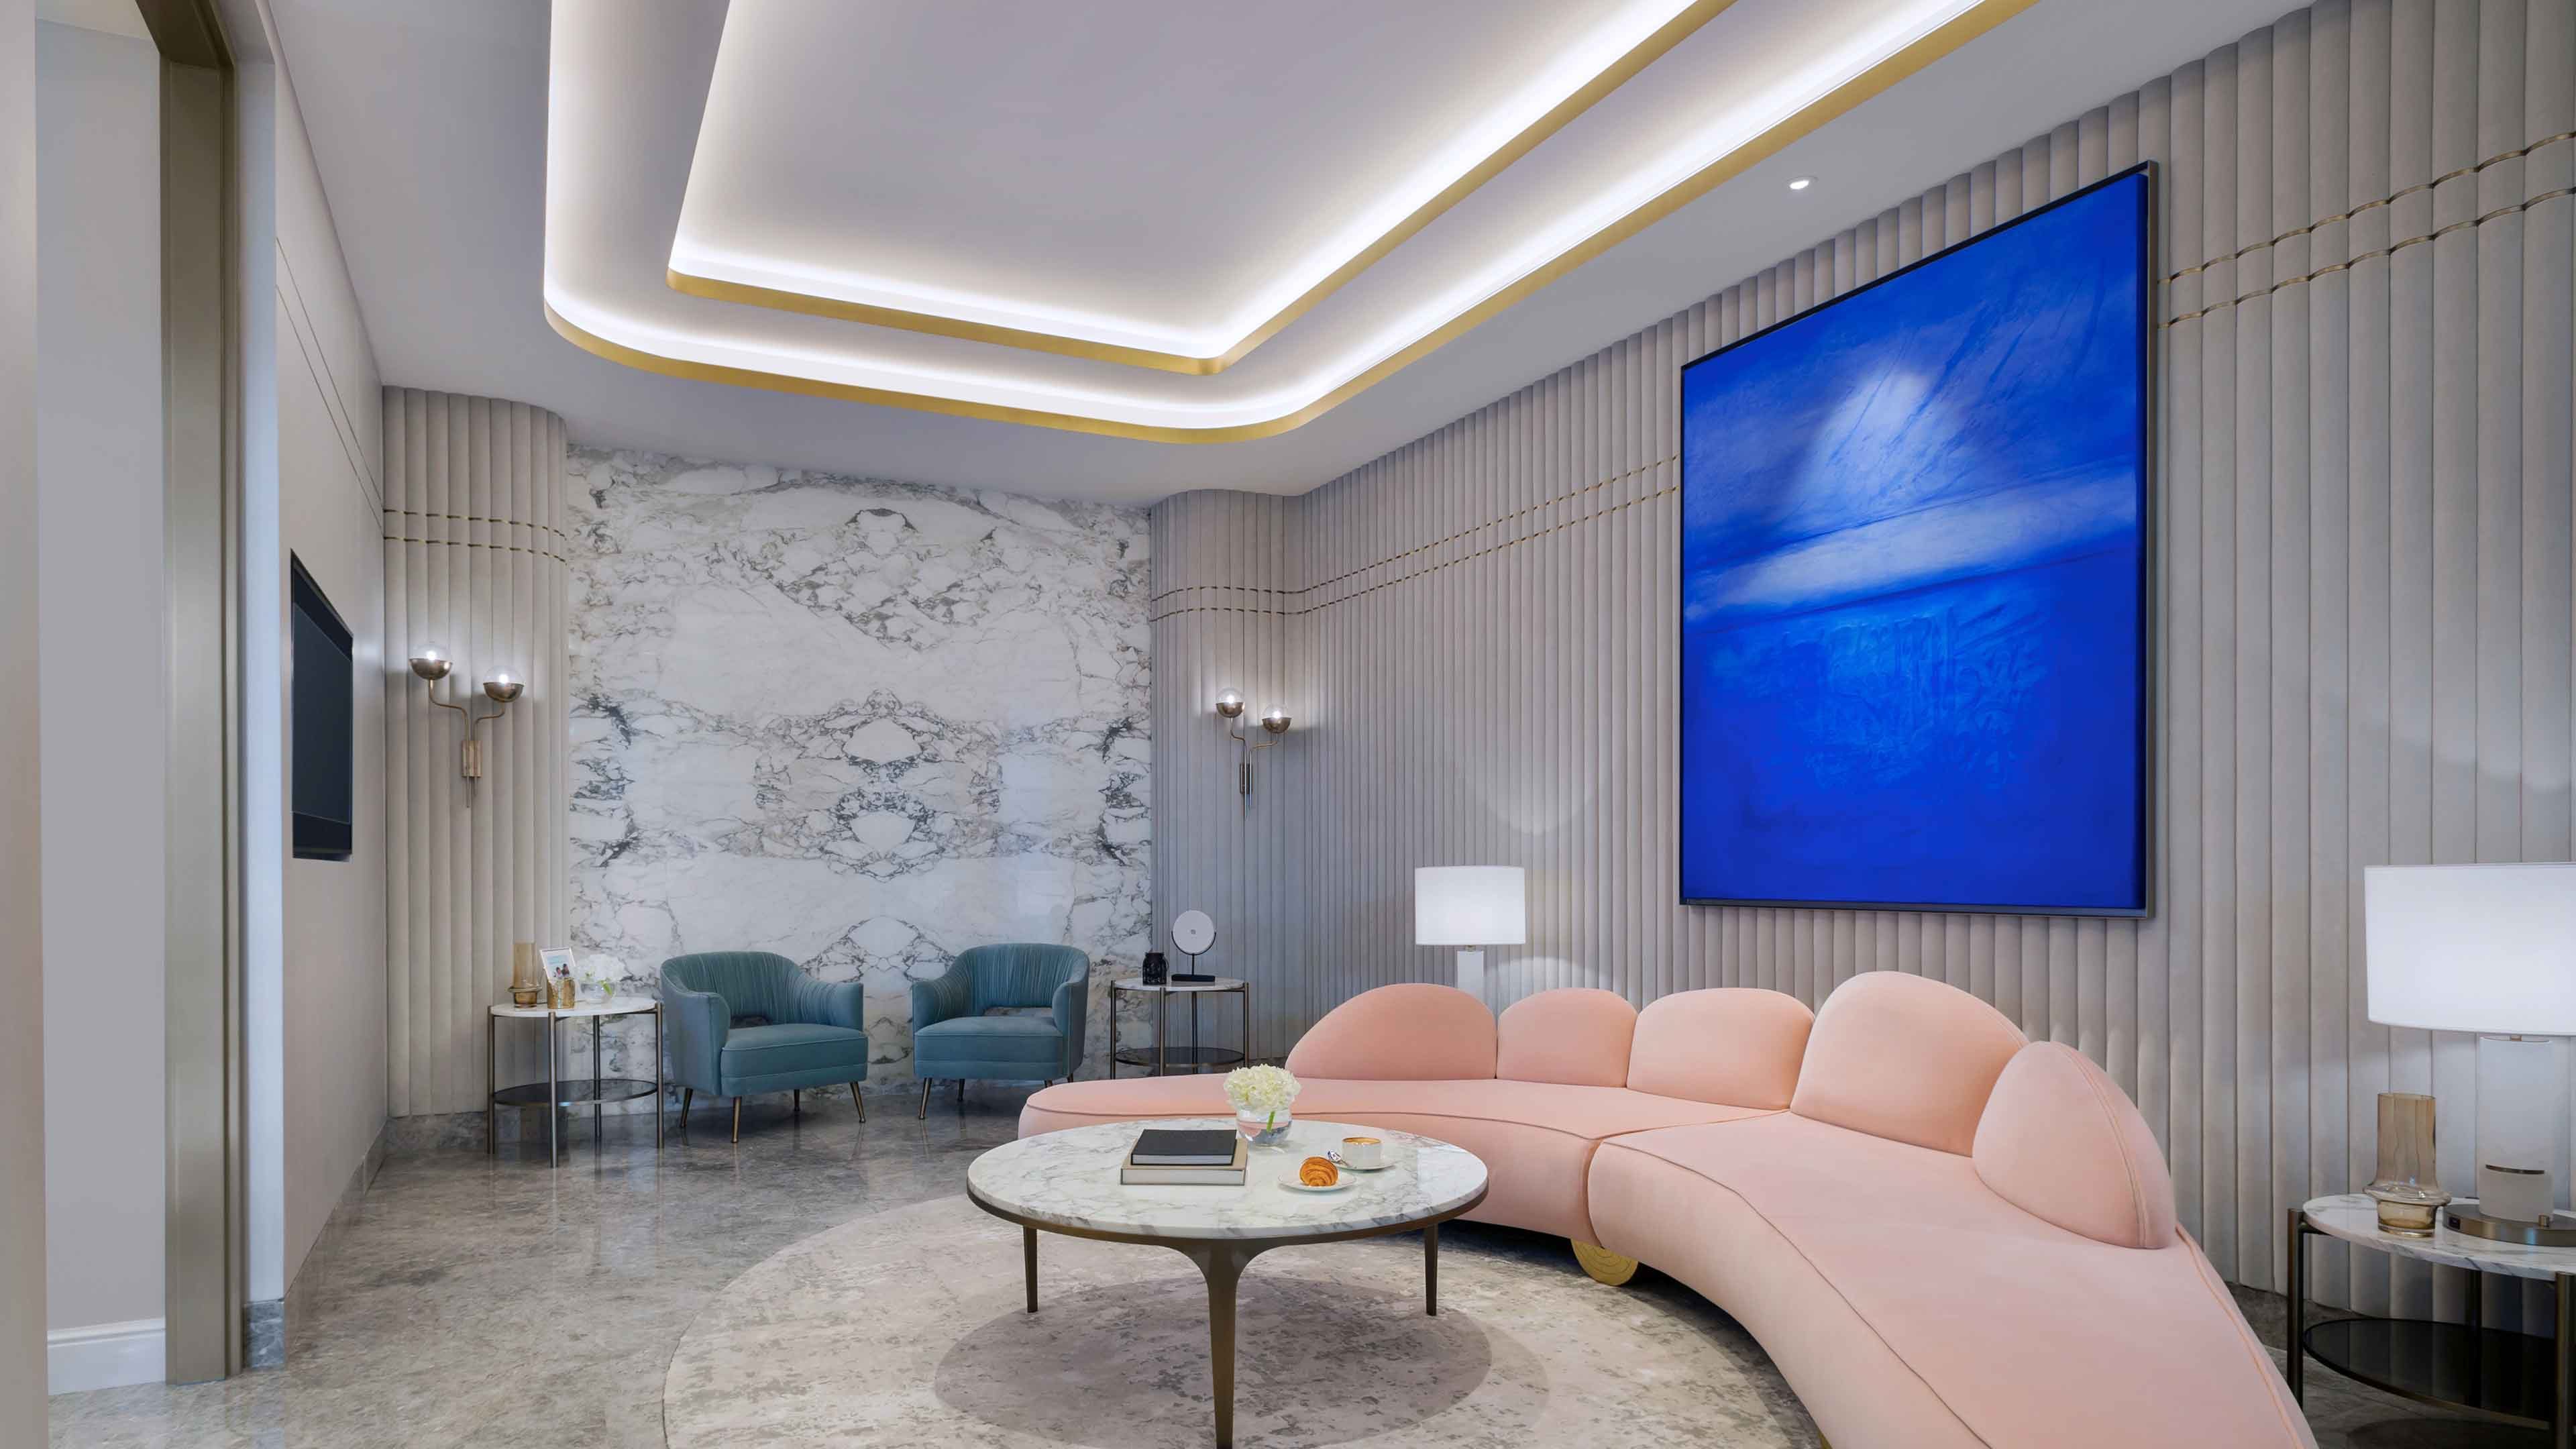 Architectural Lighting Design Dubai Airport Jumeirah T3 Arrivals Lounge VIP Lounge Feature Coffer Illumination Studio N